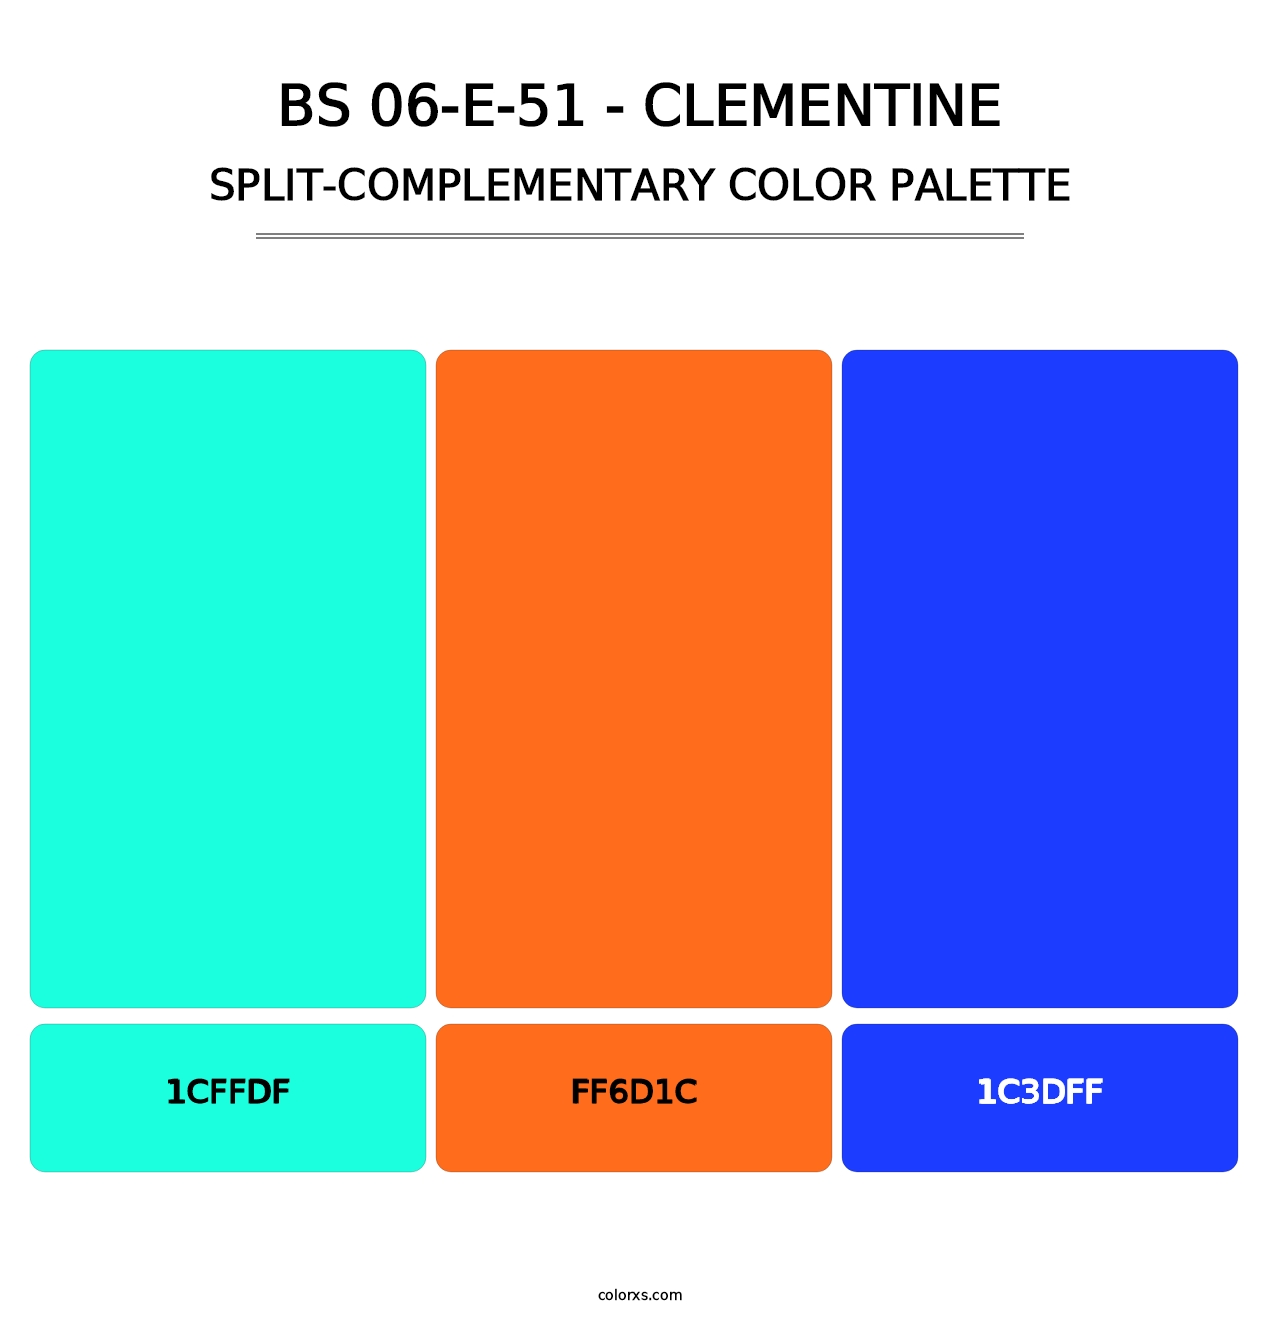 BS 06-E-51 - Clementine - Split-Complementary Color Palette